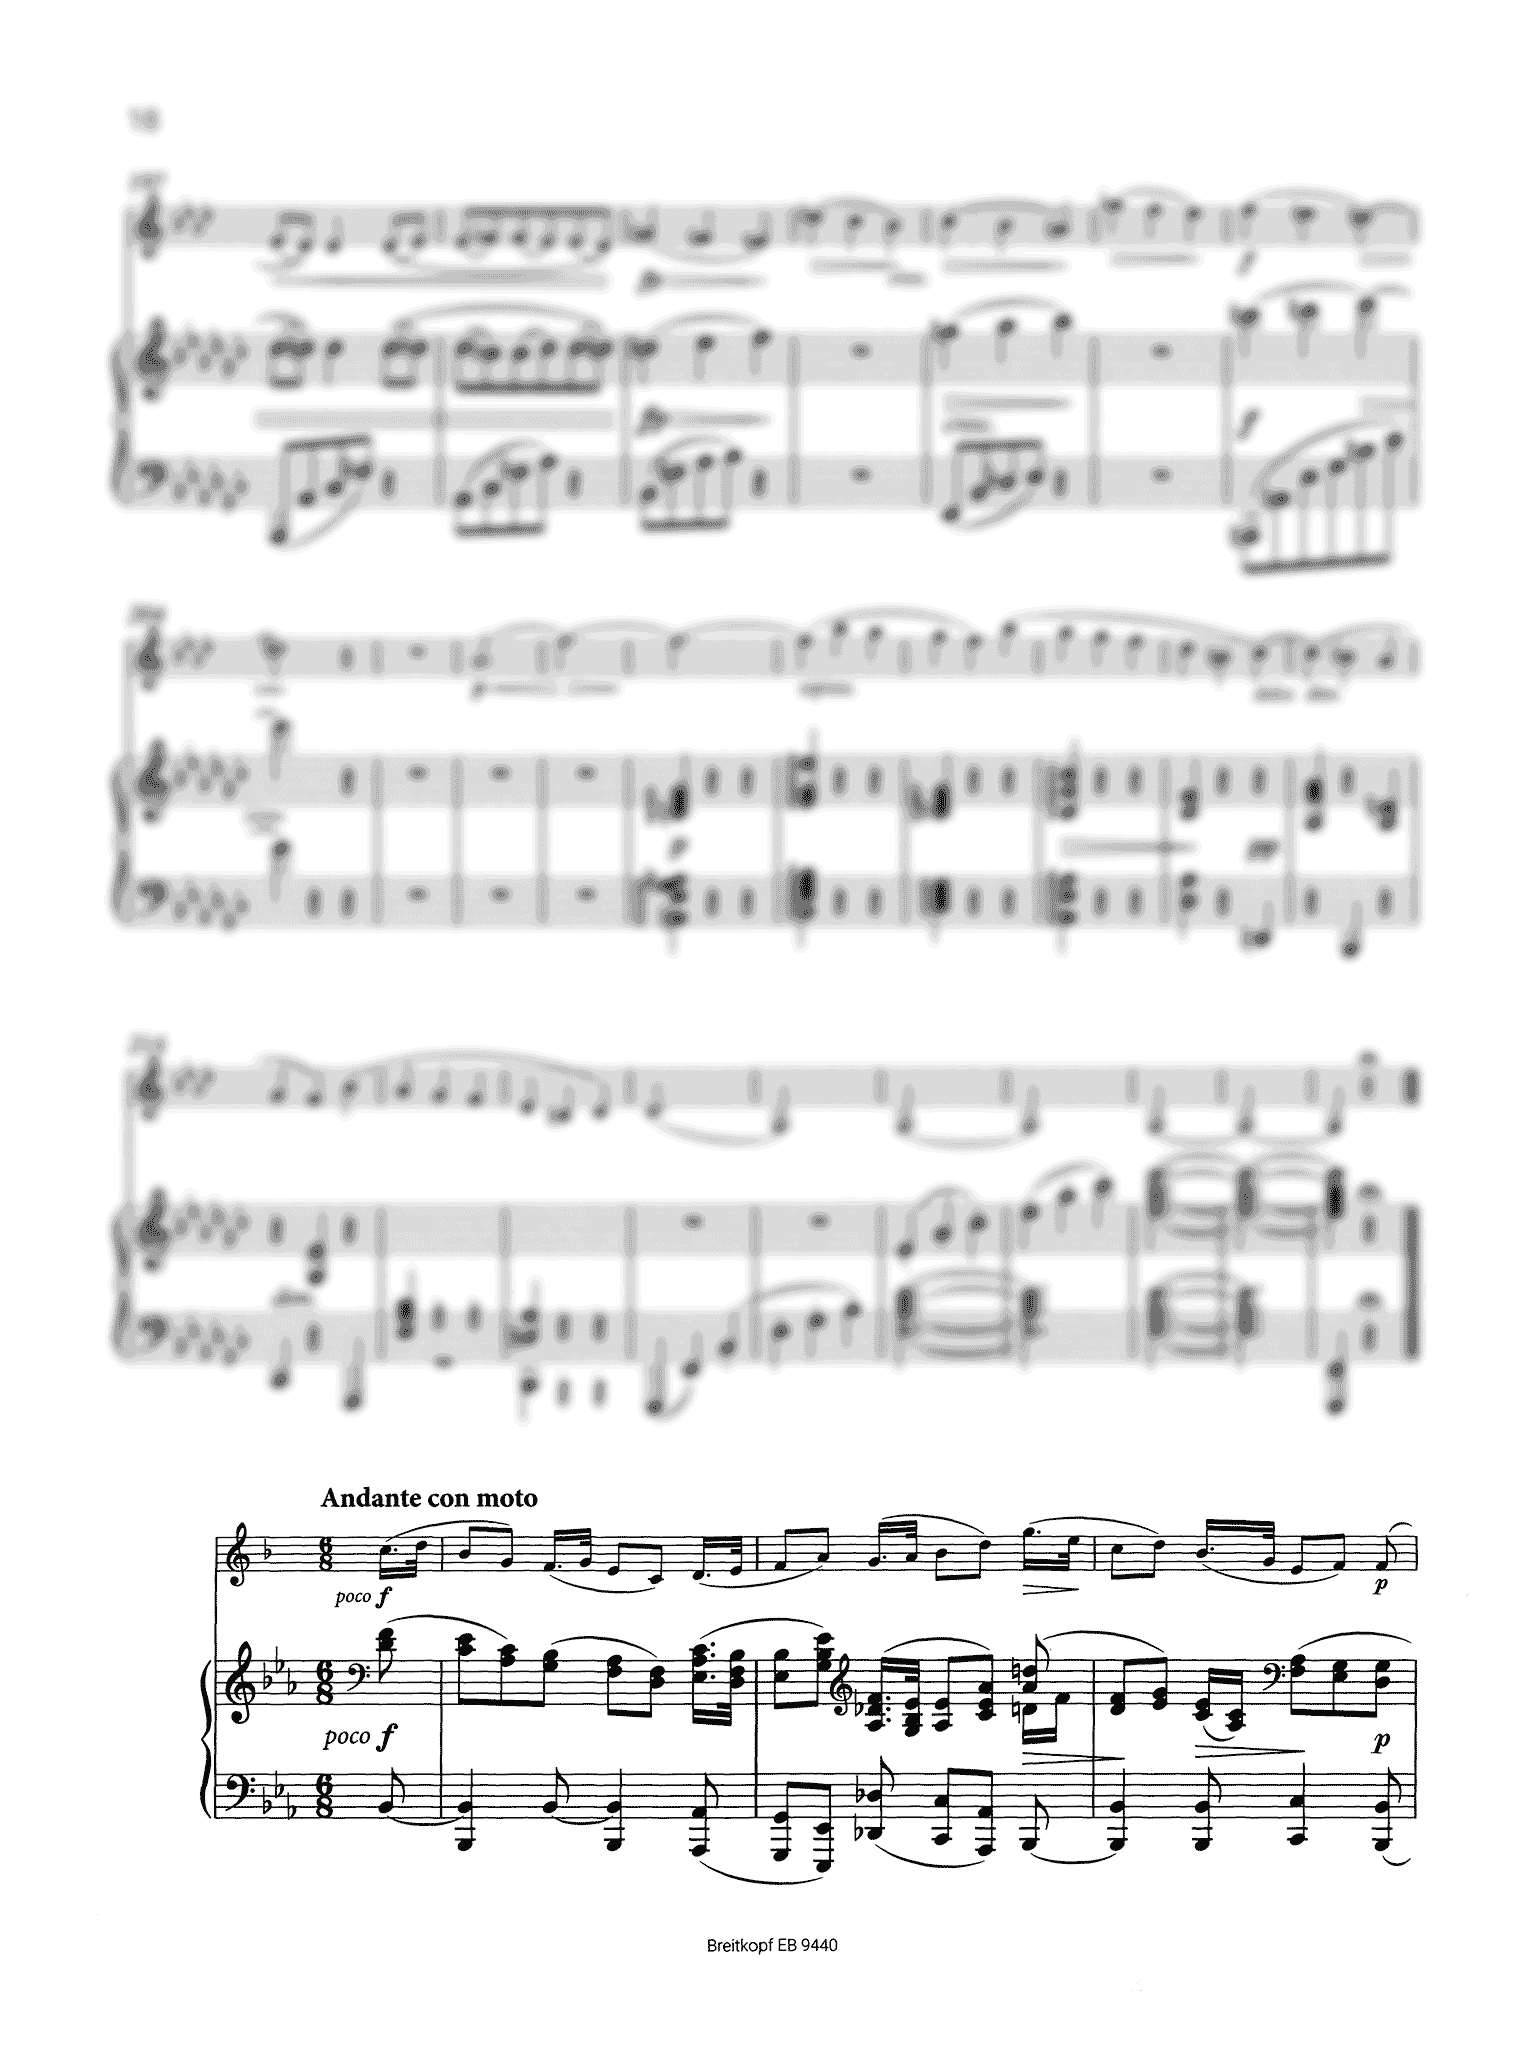 Brahms Clarinet Sonata in E-flat Major, Op. 120 No. 2 Breitkopf - Movement 3